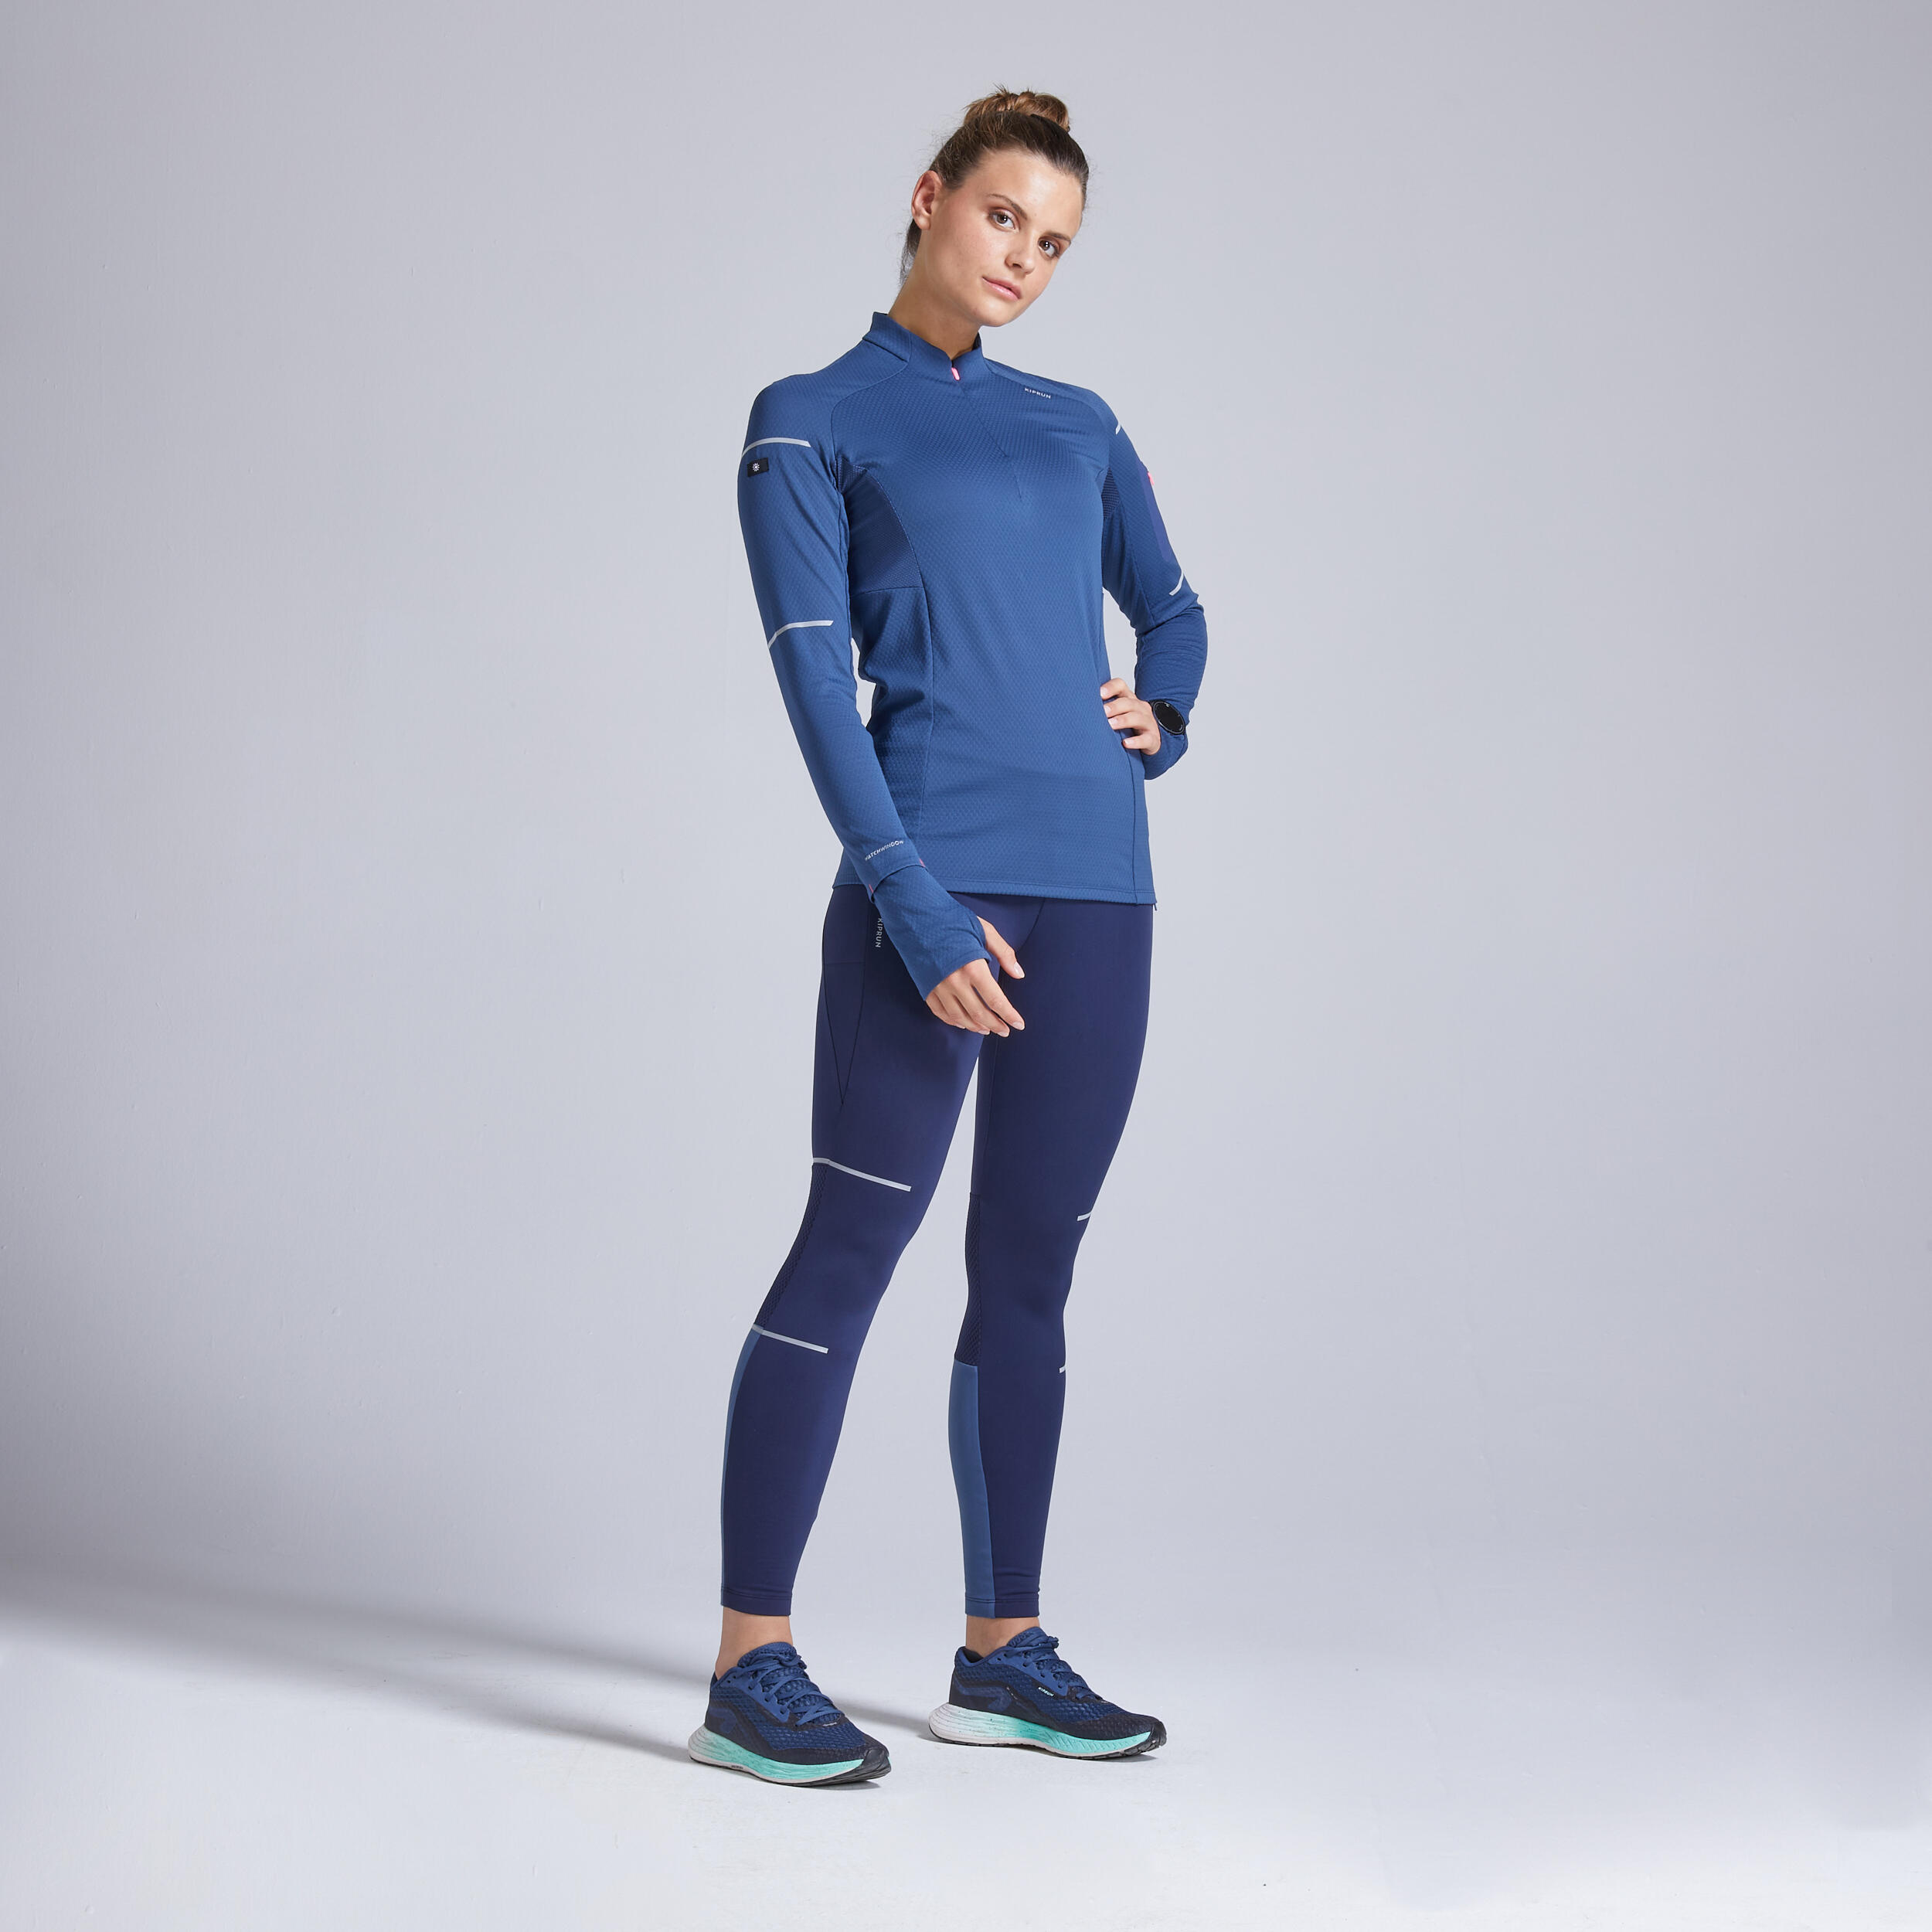 Warm Light Women's Winter Running Long-Sleeved T-Shirt - slate blue 11/11